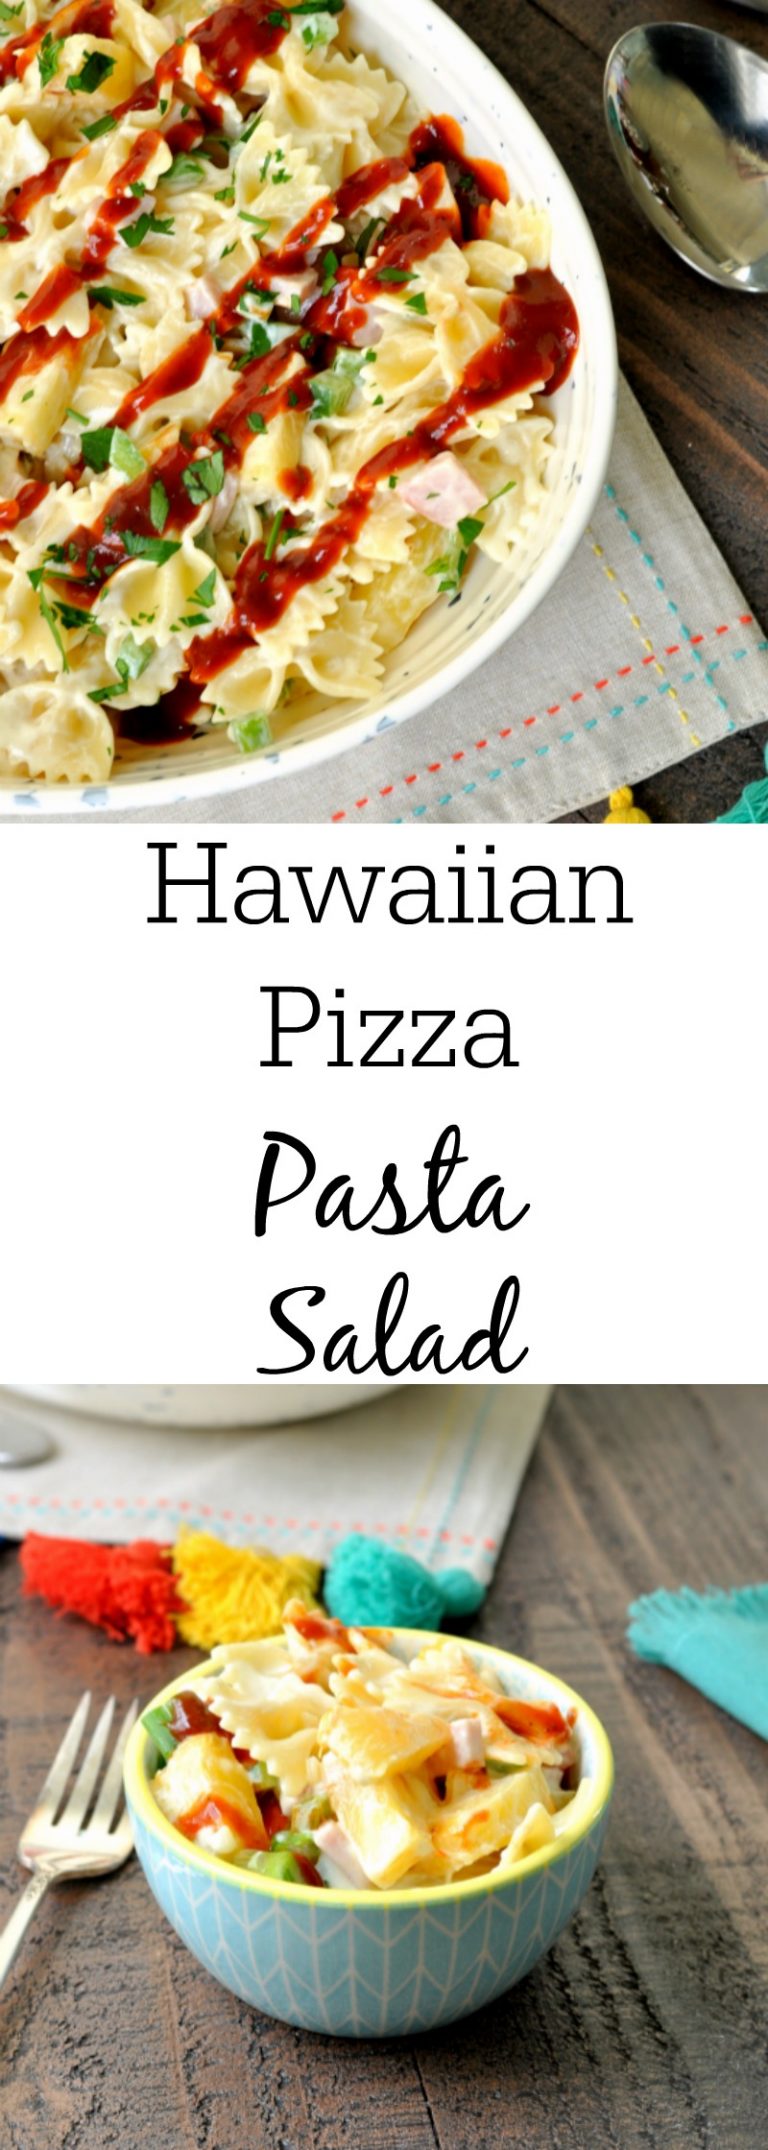 Hawaiian Pizza Pasta Salad - An Easy Pasta Salad Recipe